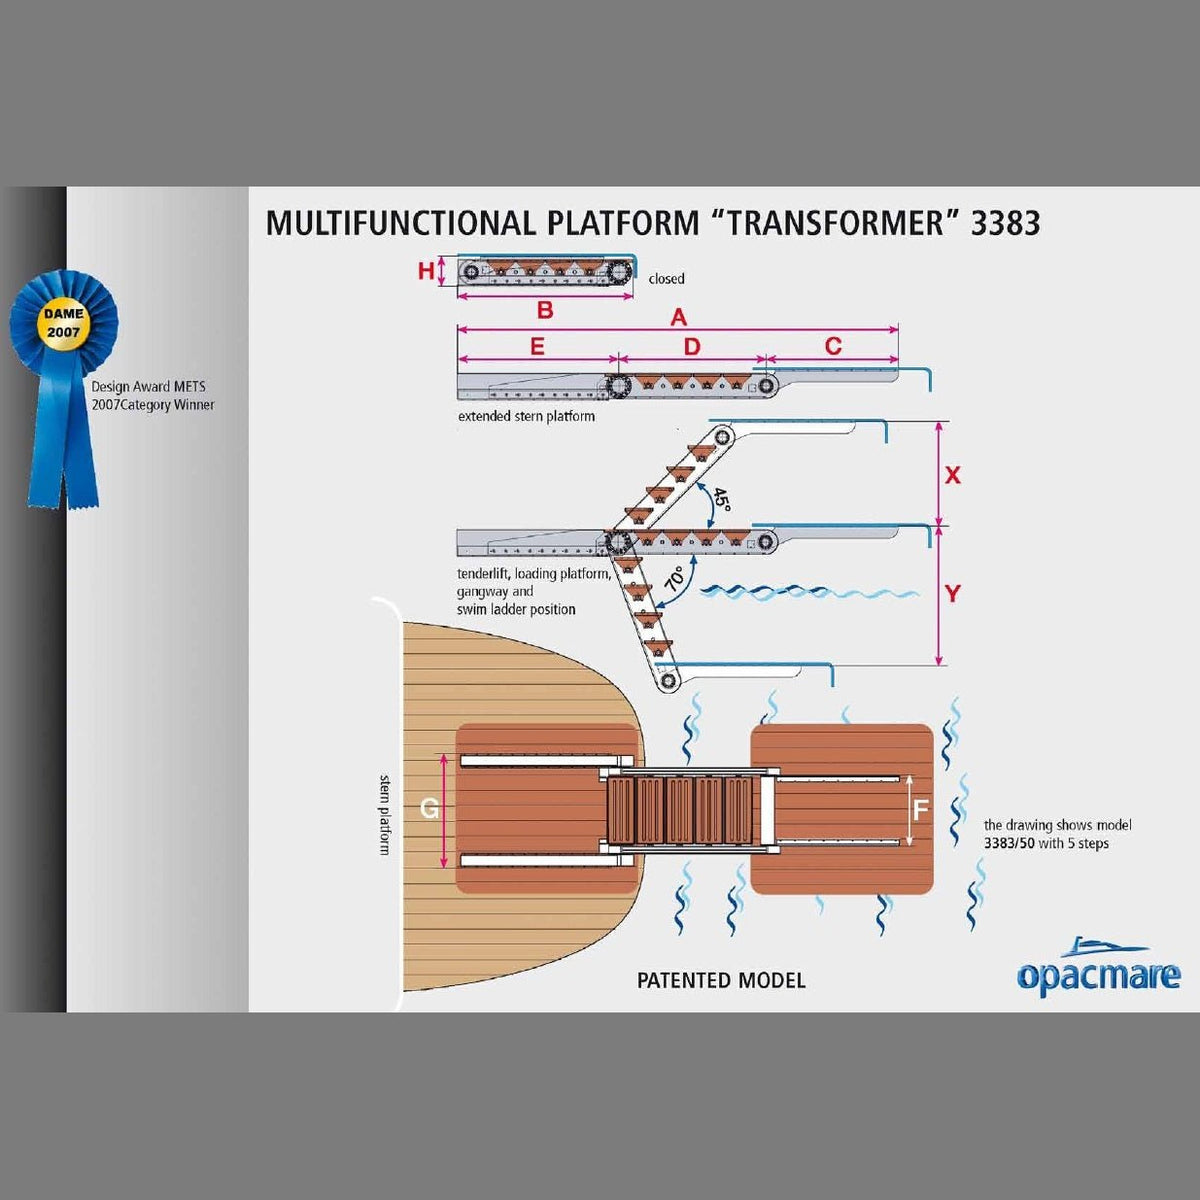 Opacmare Multifunctional Transformer Platform 3383